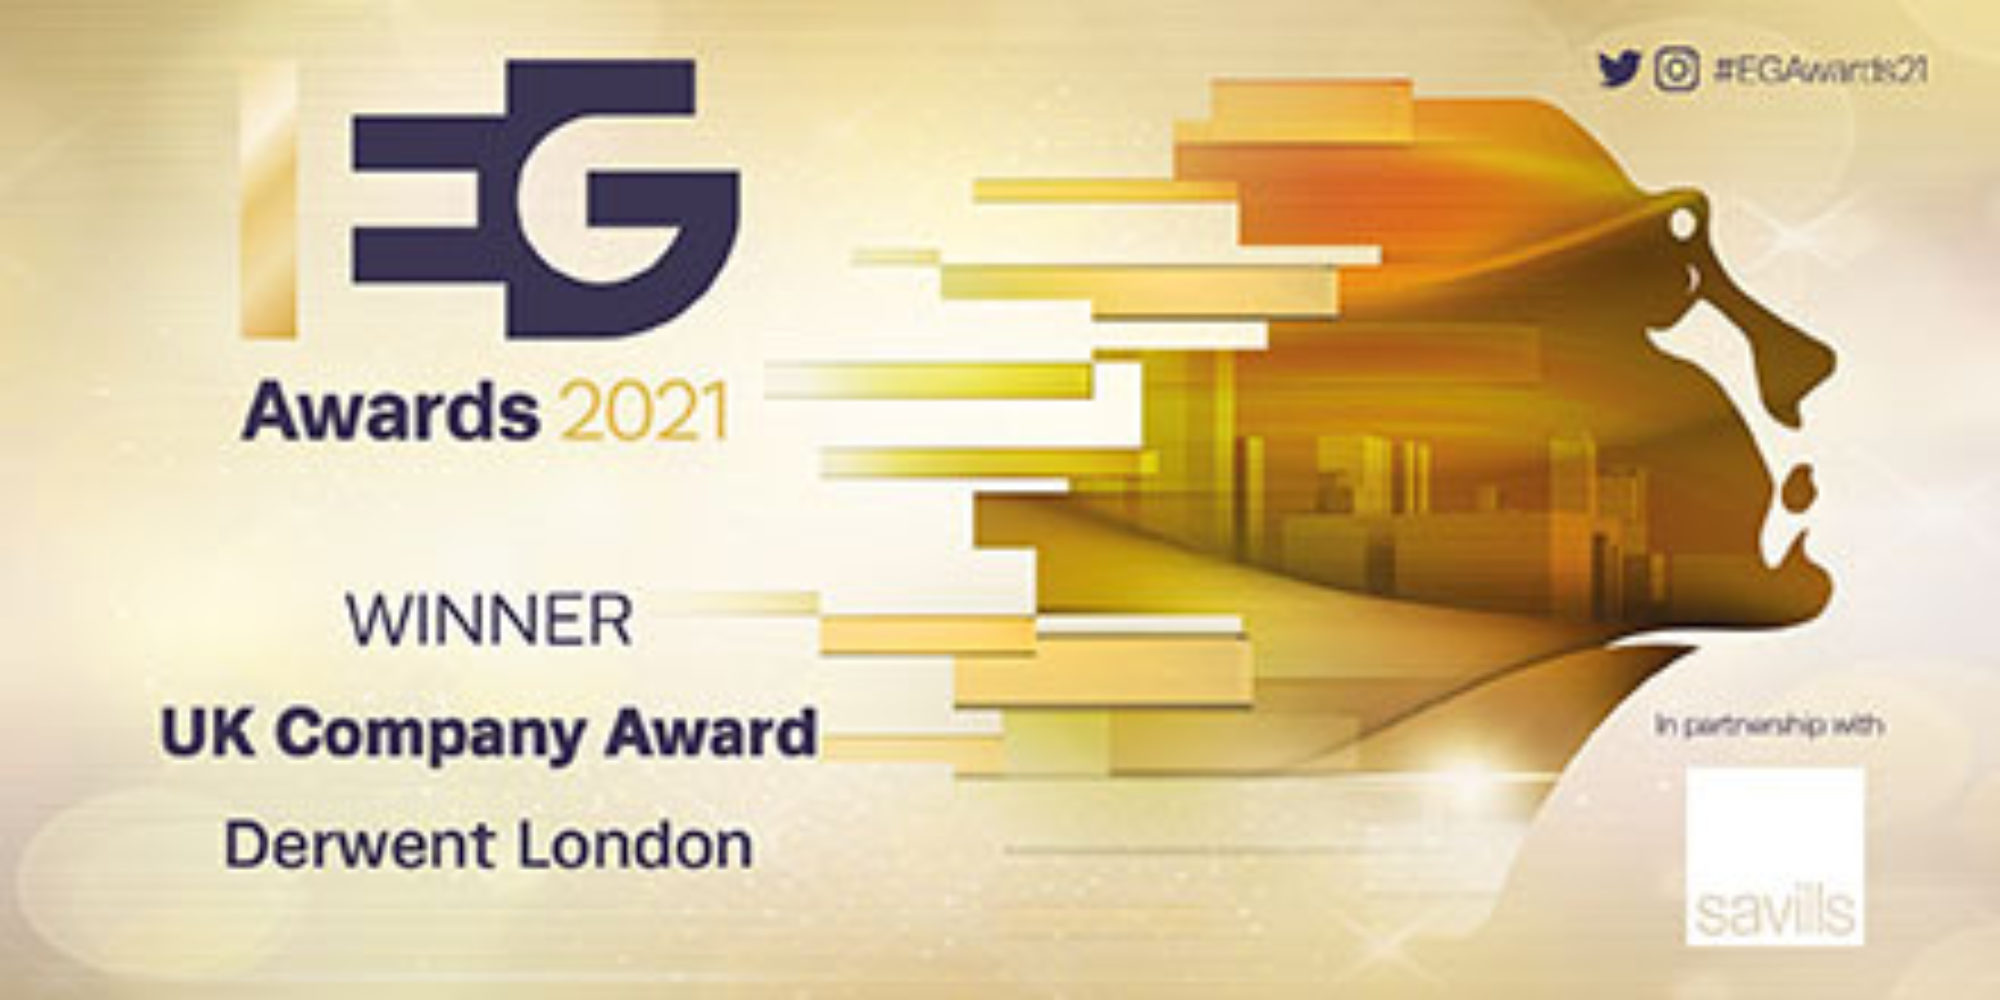 UK Company Award winner at the EG Awards 2021